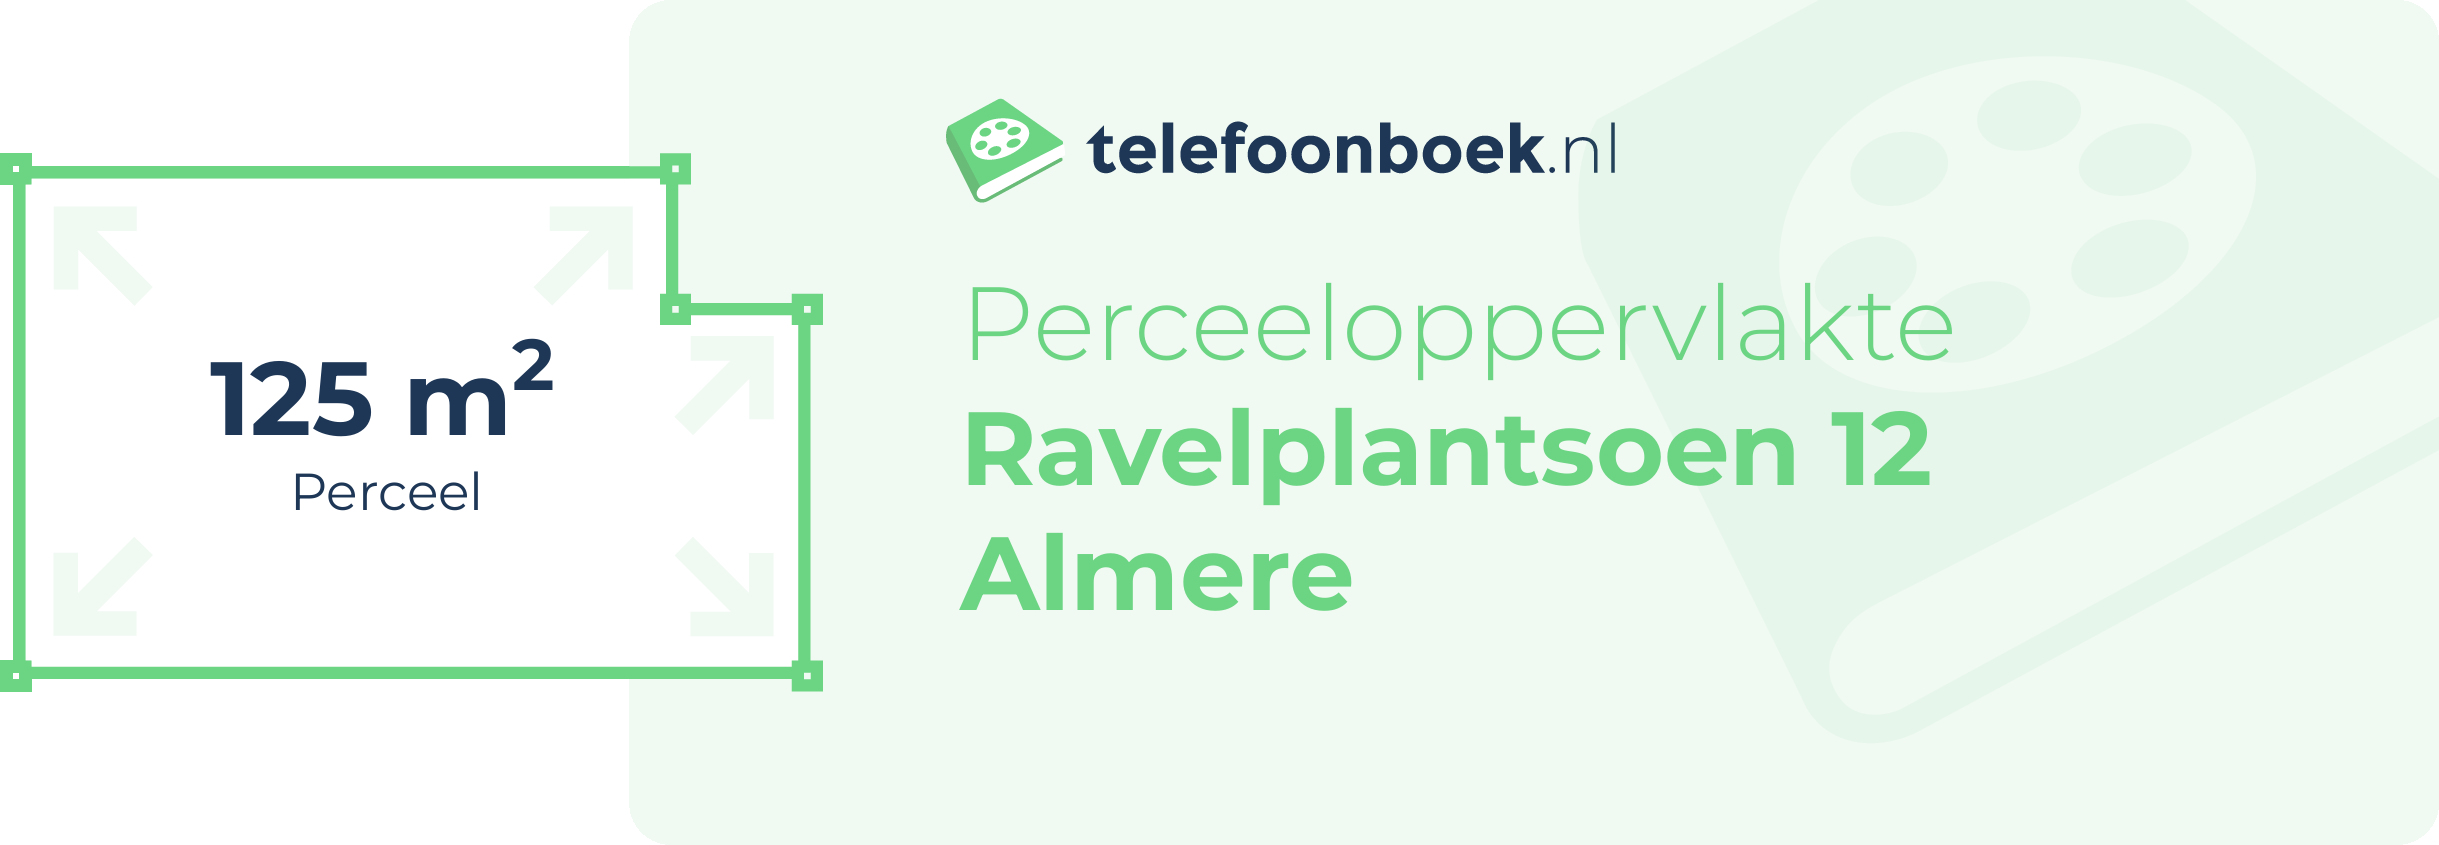 Perceeloppervlakte Ravelplantsoen 12 Almere